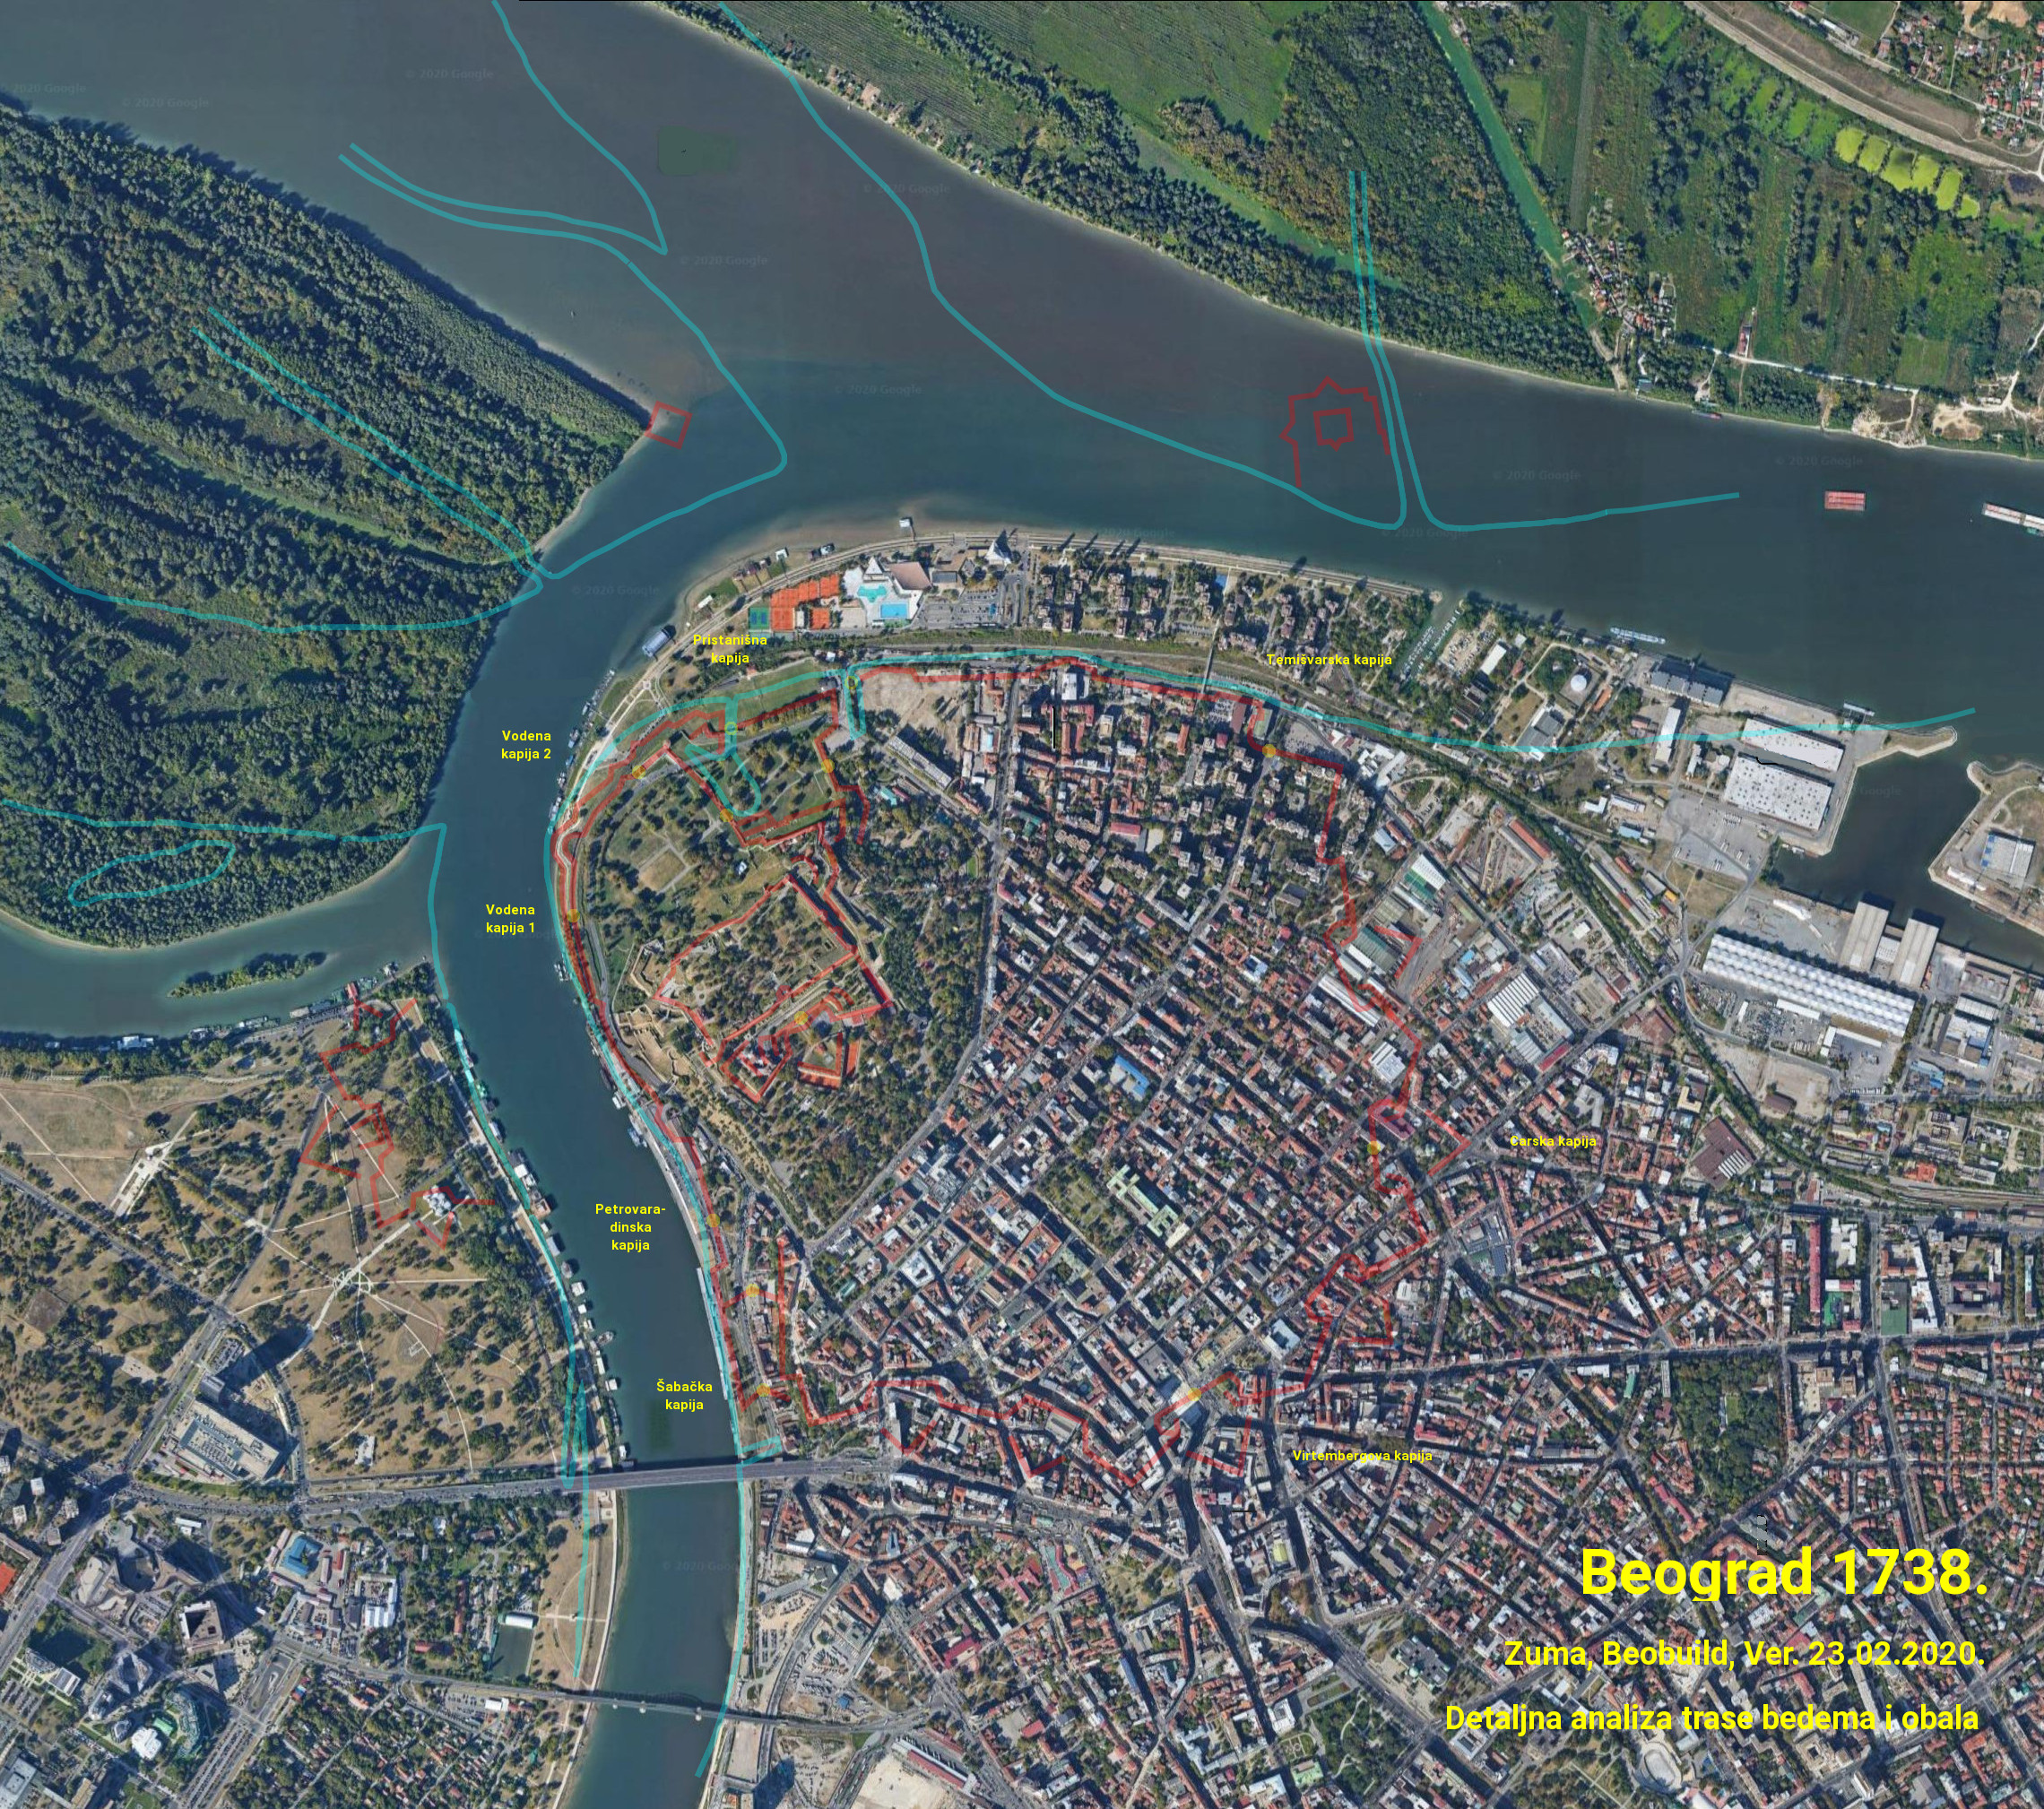 Beograd-1738-3-Detaljna-analiza-trase-bedema-i-obala.jpg